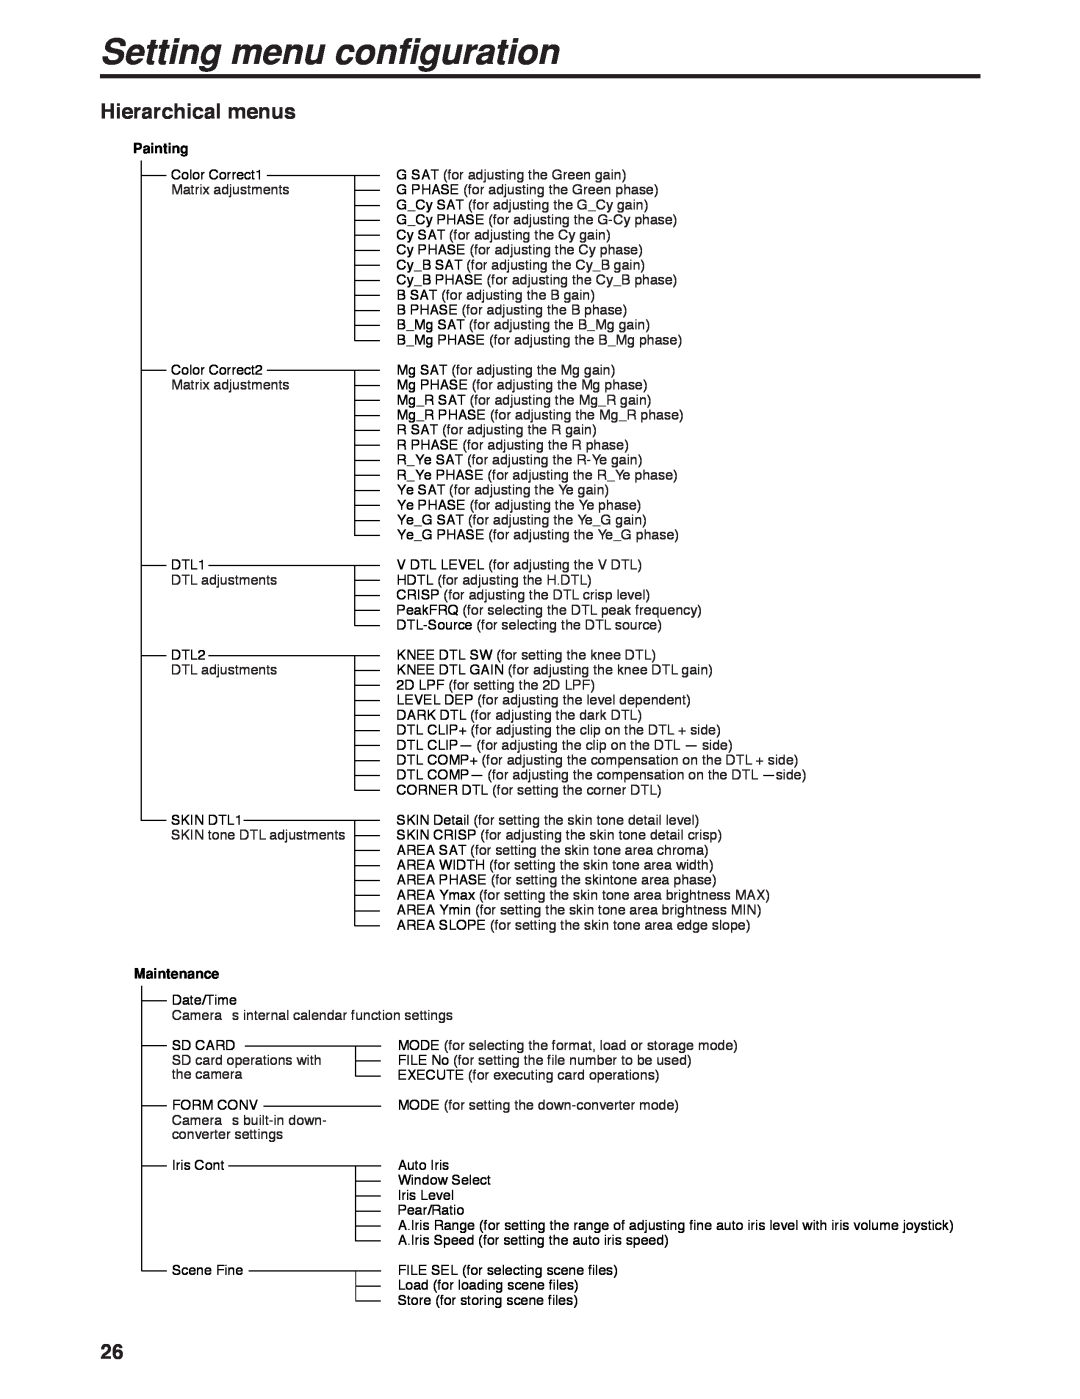 Panasonic AK-HC931B manual Setting menu configuration, Hierarchical menus, Painting, Color Correct1 Matrix adjustments 